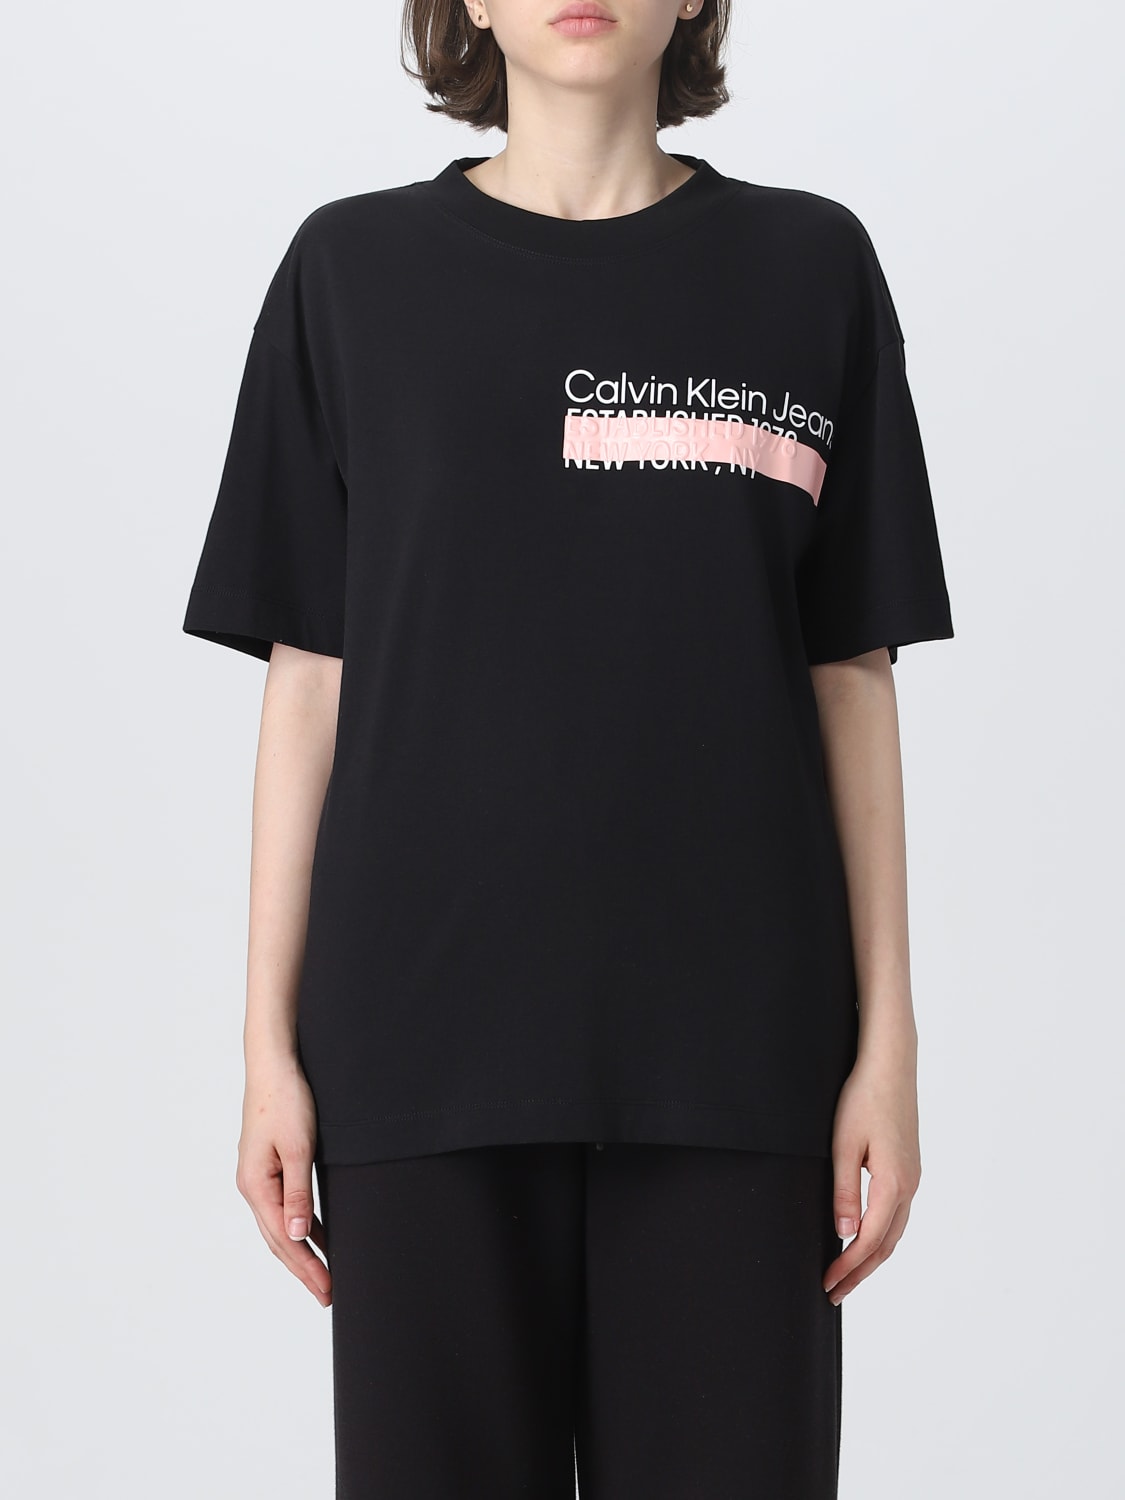 CALVIN KLEIN JEANS: T-shirt woman - Black